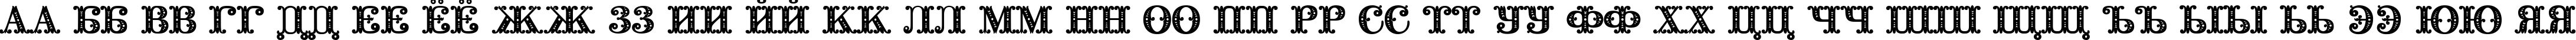 Пример написания русского алфавита шрифтом Barocco Initial